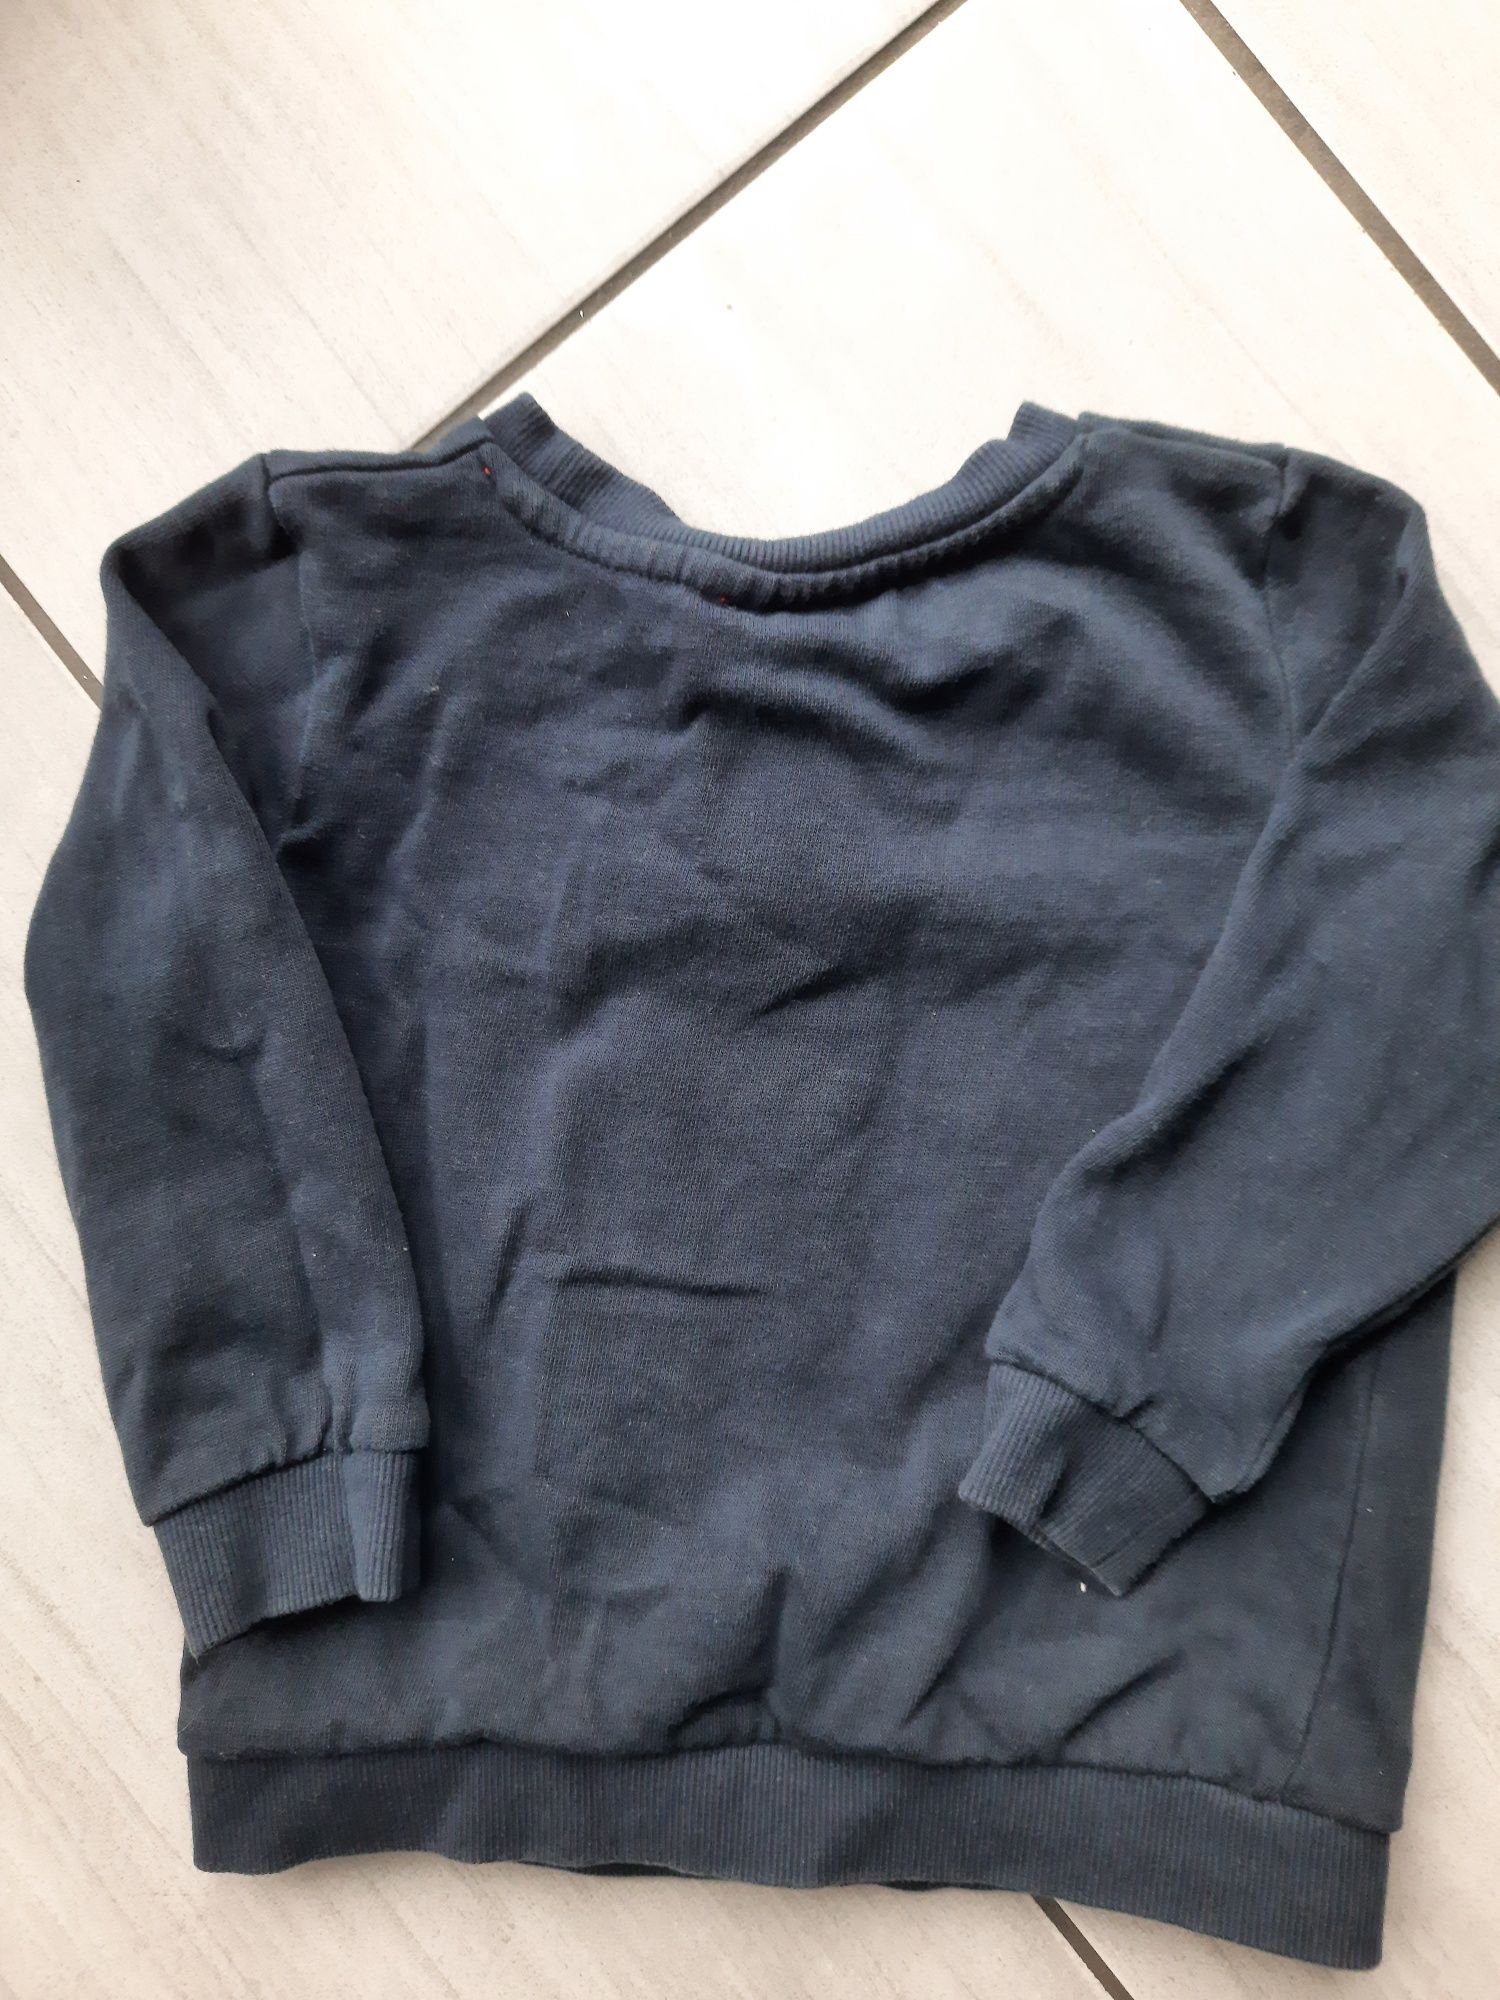 Granatowa bluza z nadrukiem 92